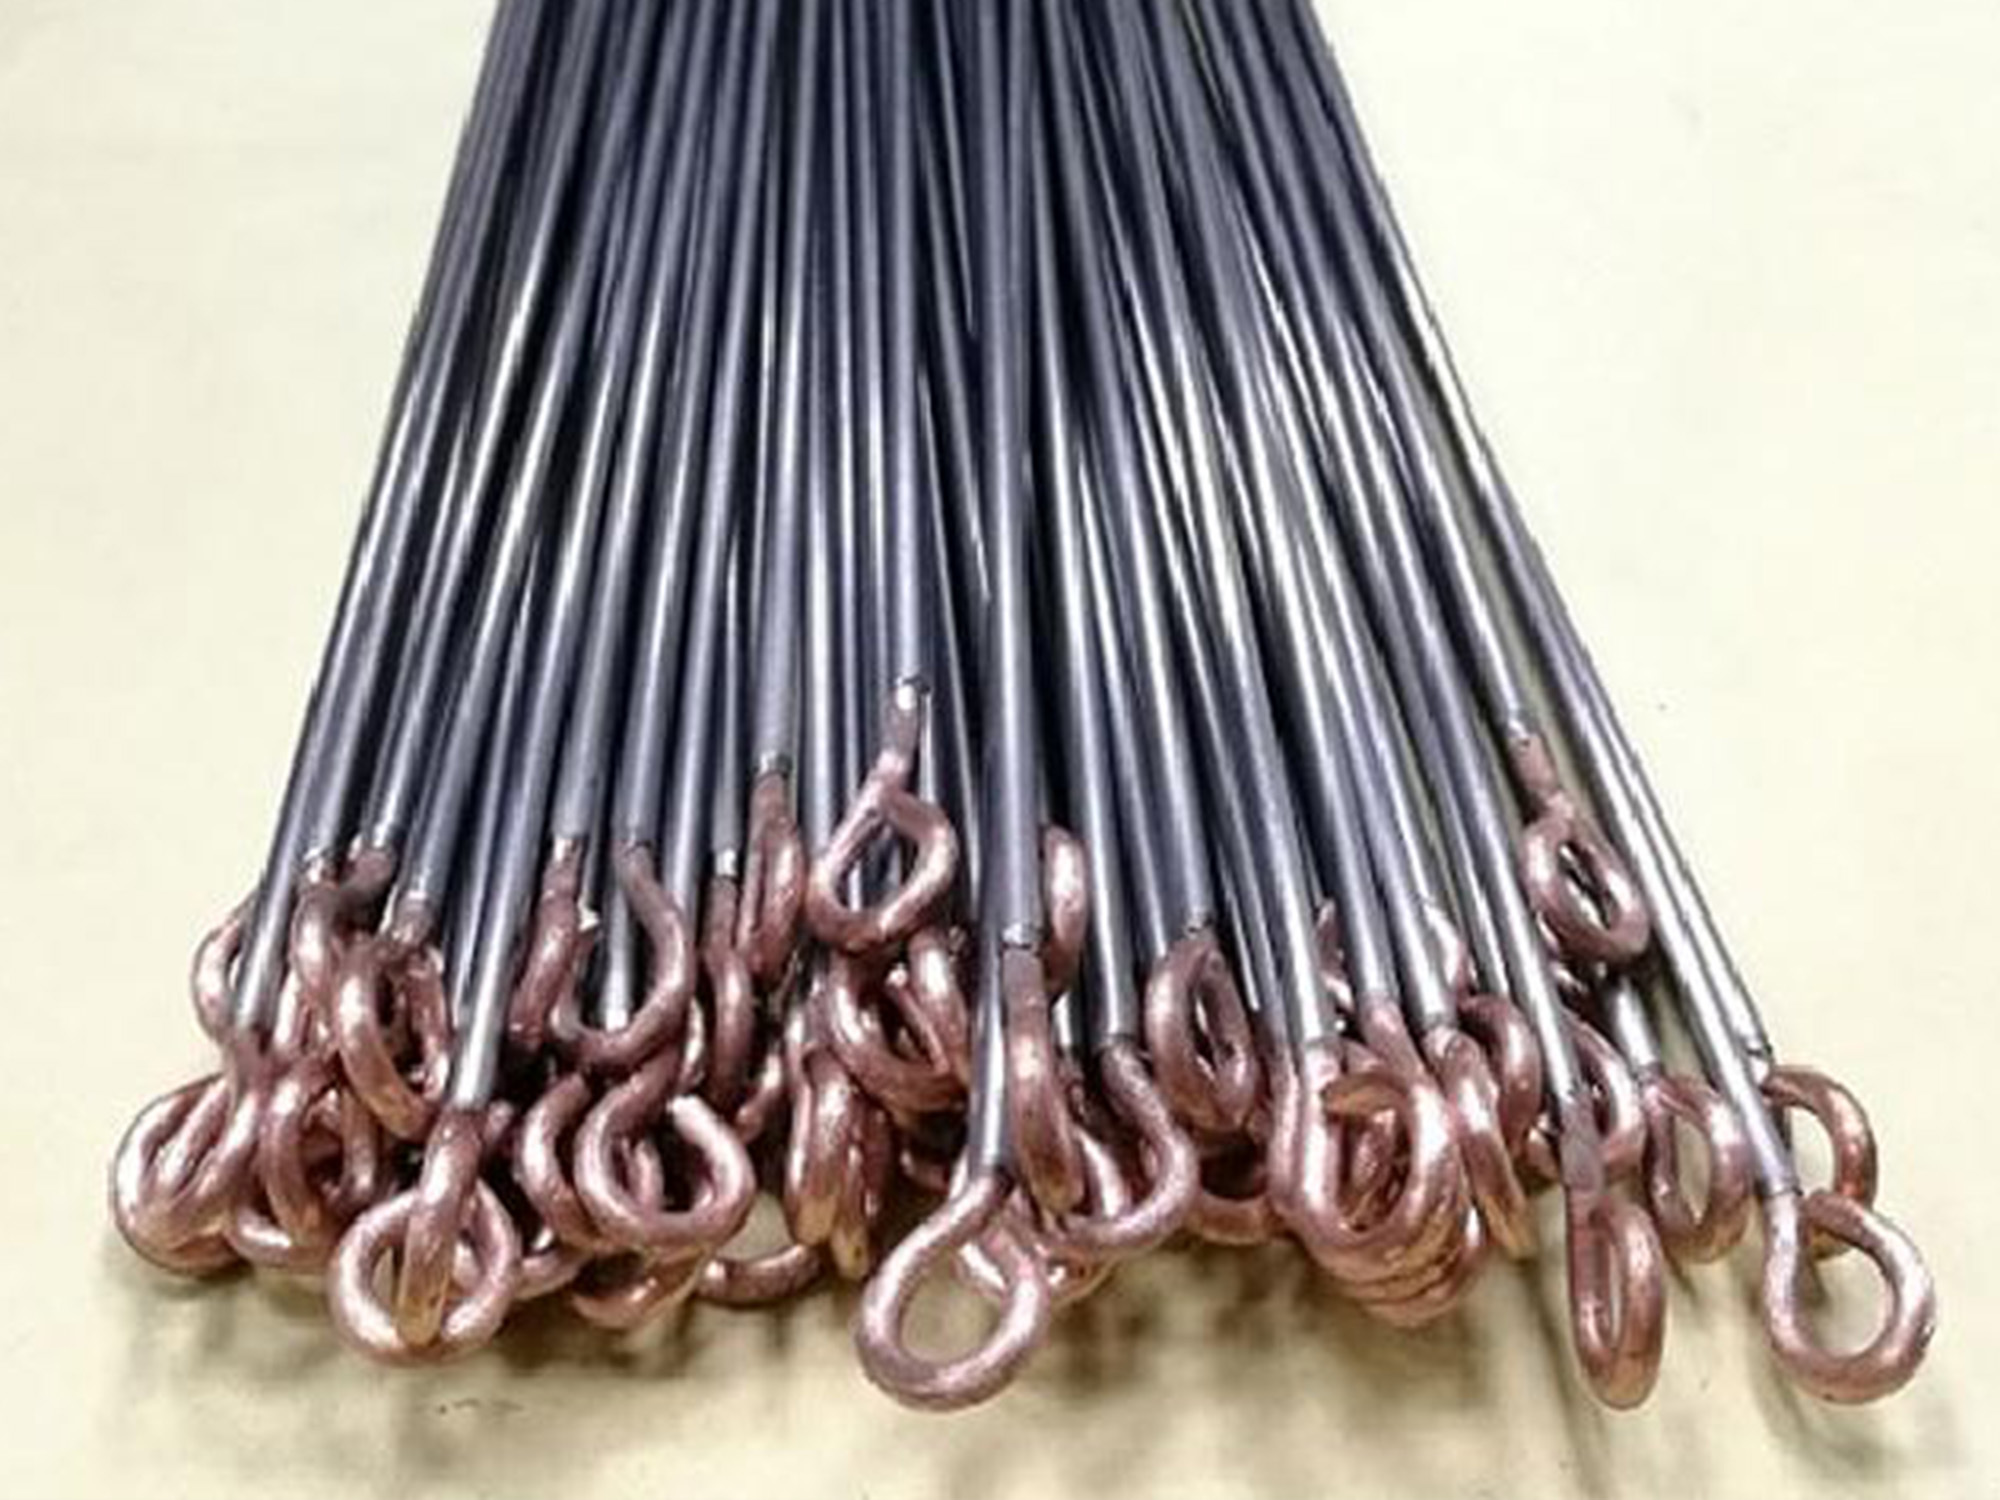 Copper core tantalum electrode